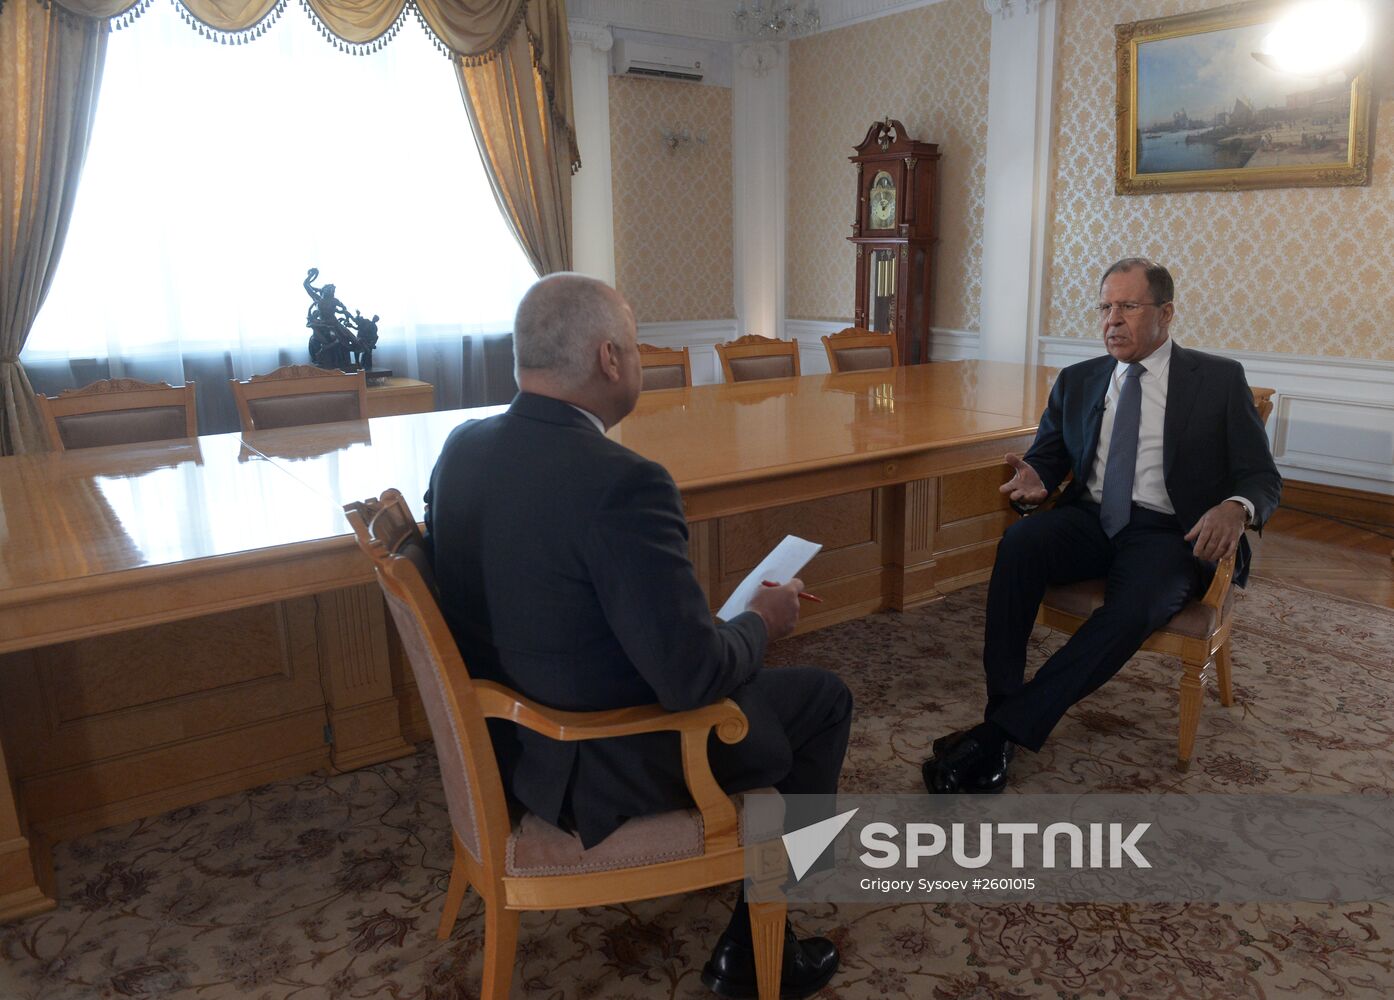 Russian Foreign Minister Sergei Lavrov's interview to Rossiya Segodnya's Director General Dmitry Kiselev